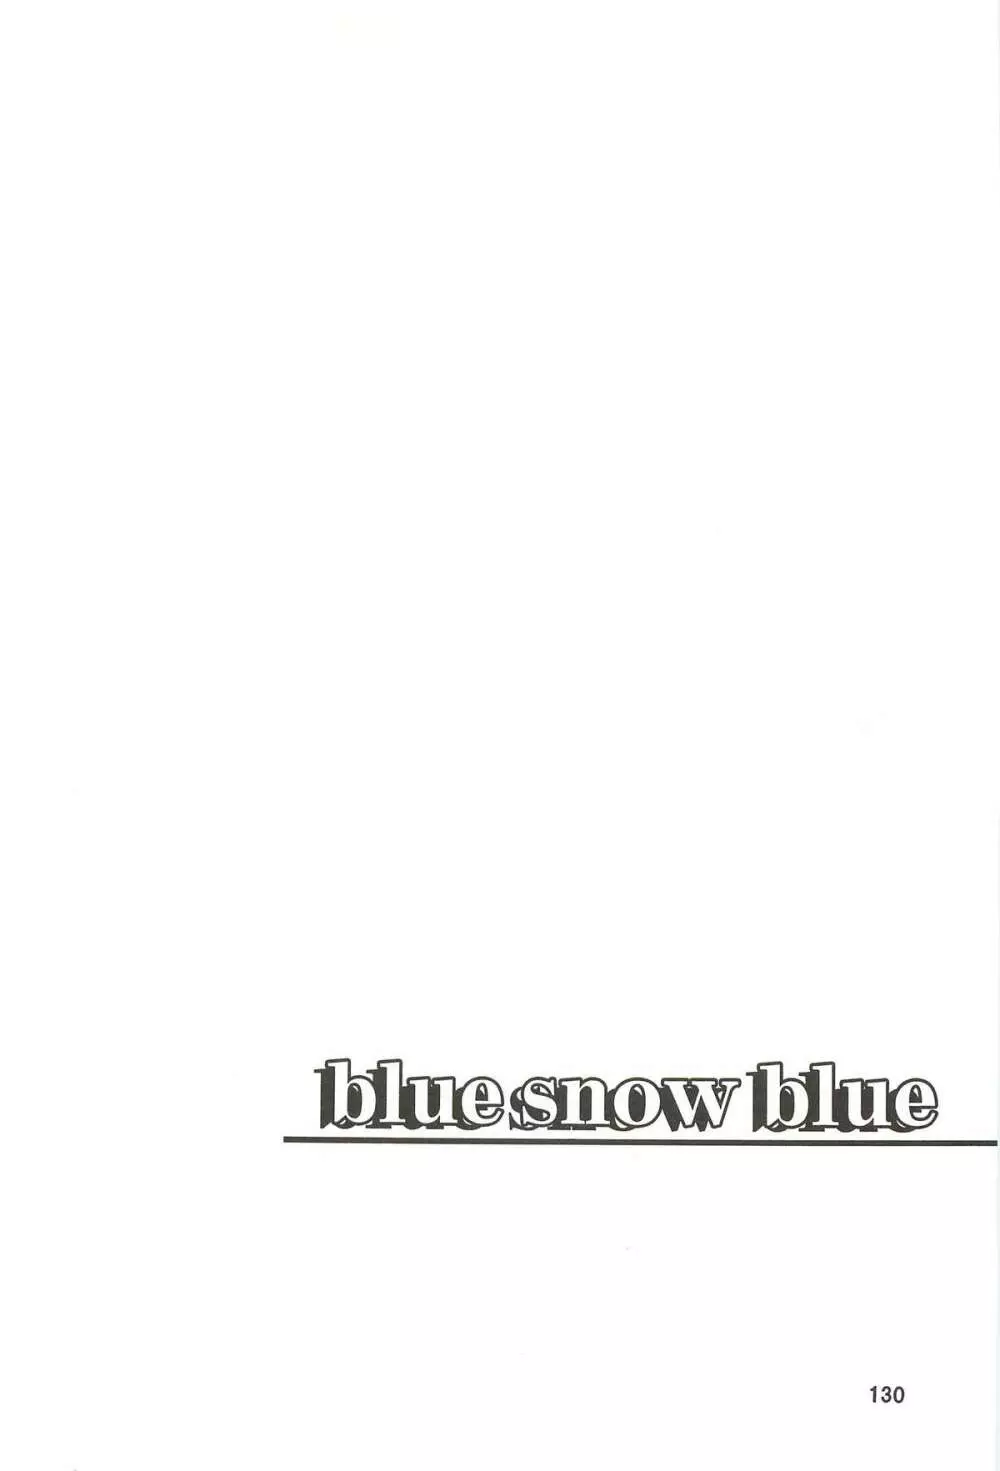 blue snow blue 総集編3 scene.7～scene.9 131ページ